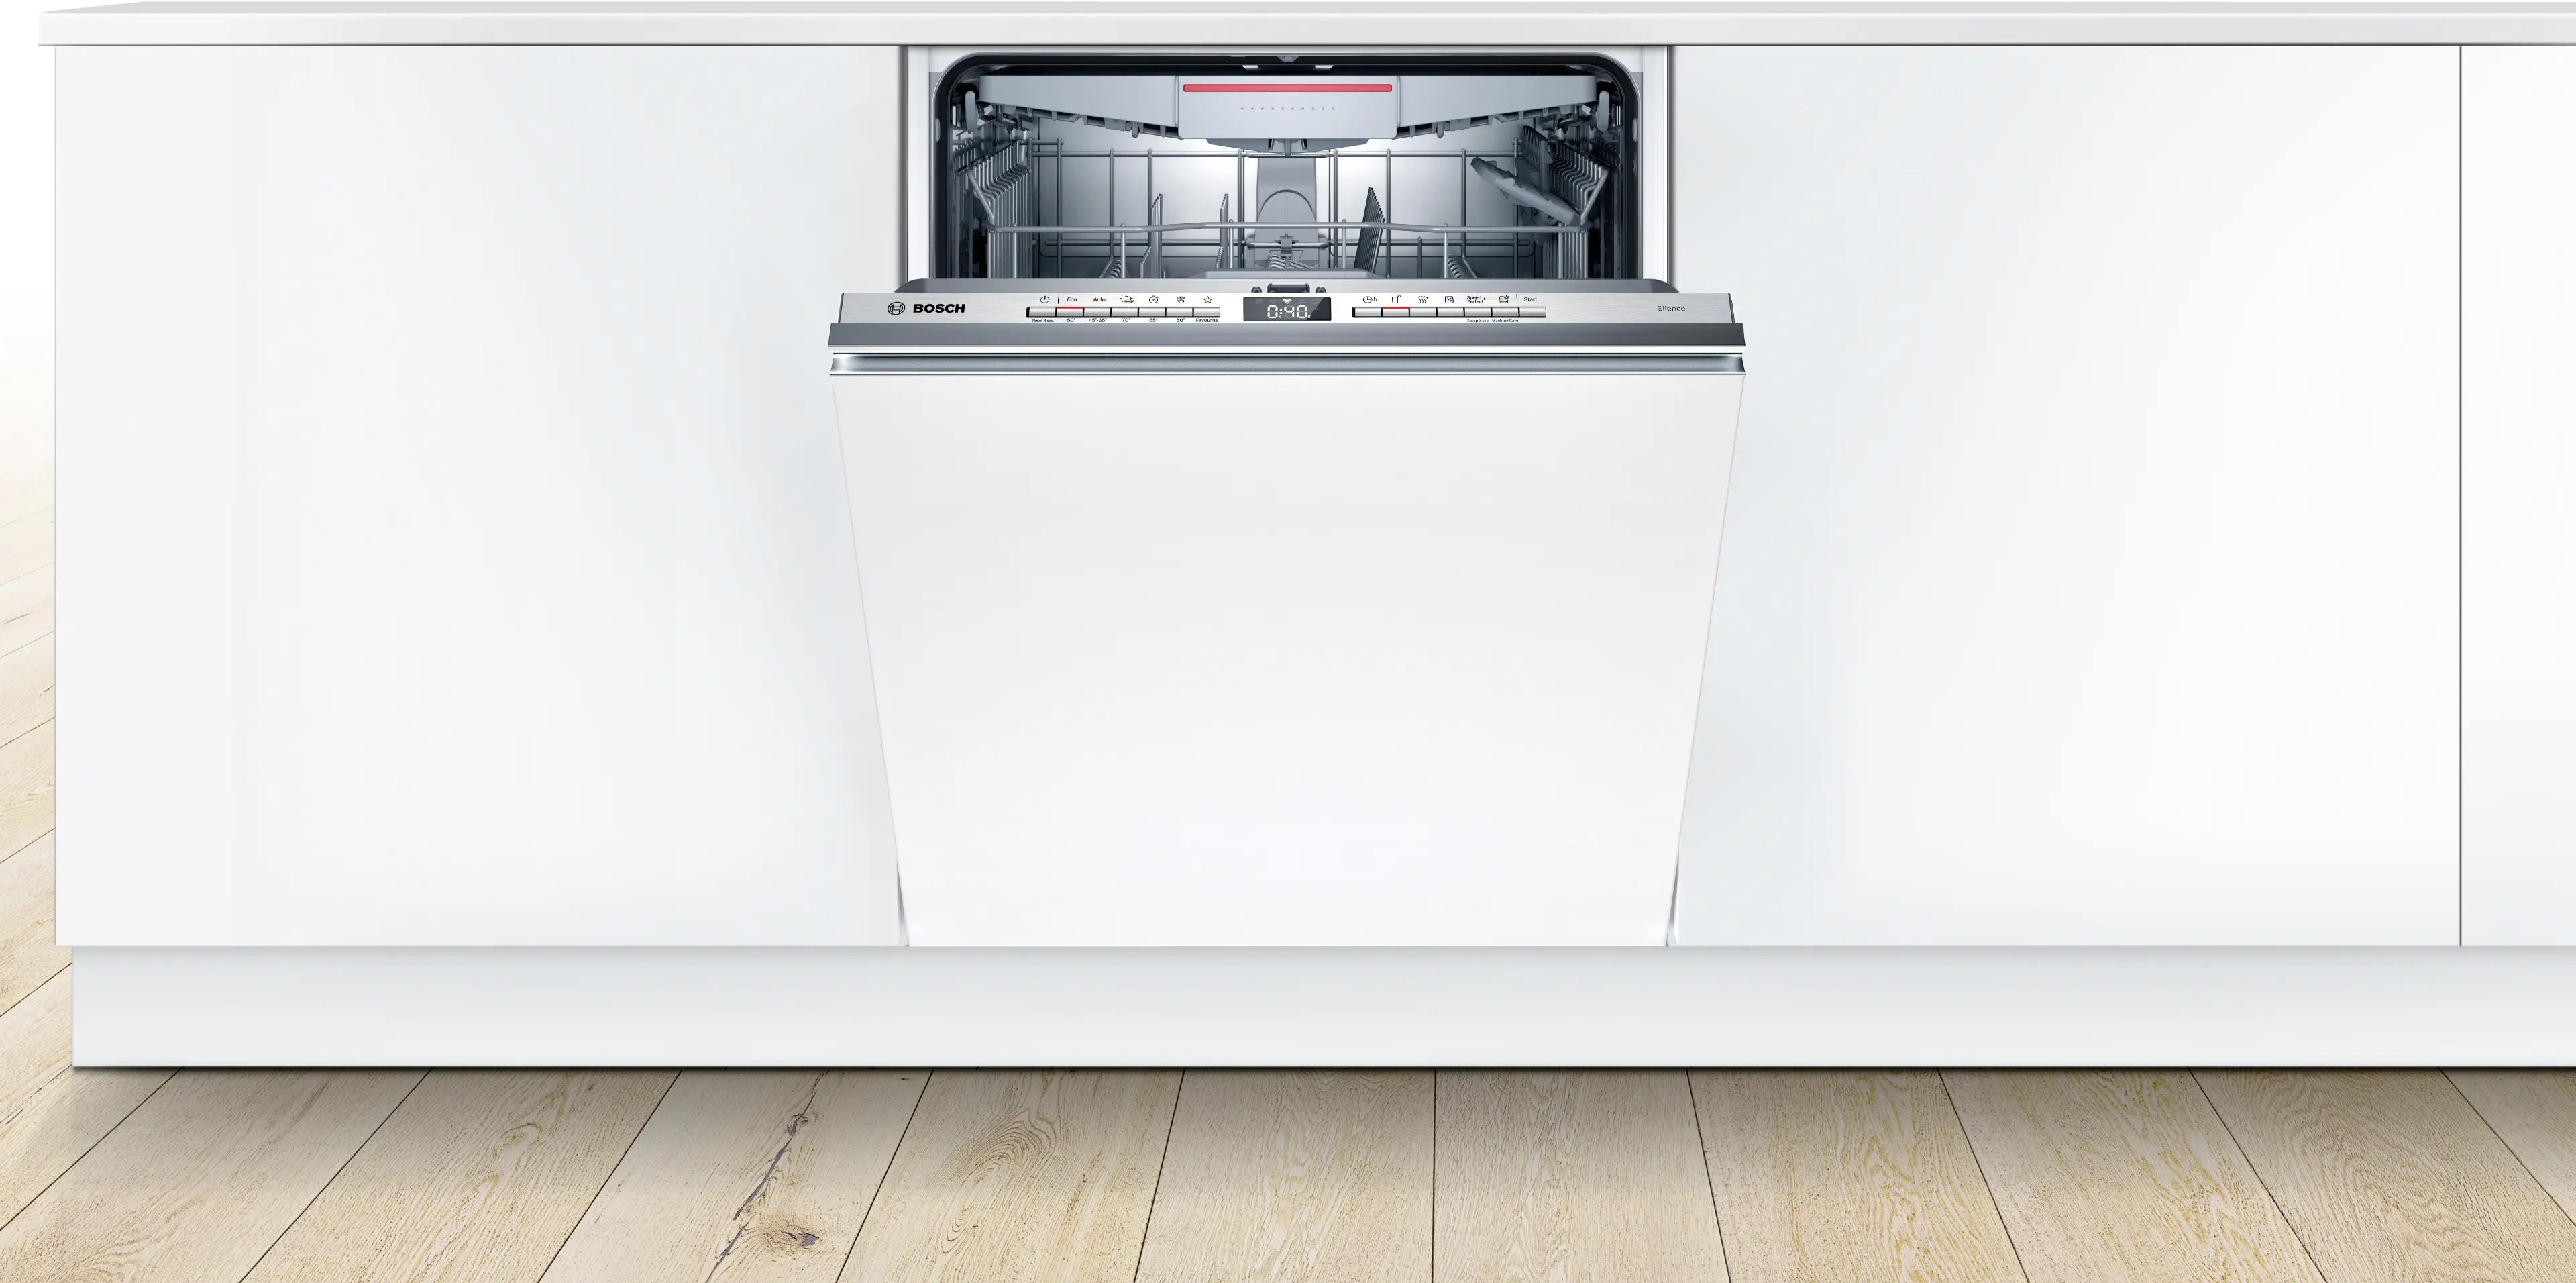 Посудомоечная машина Bosch SMV4HCX40K цена 37699.00 грн - фотография 2